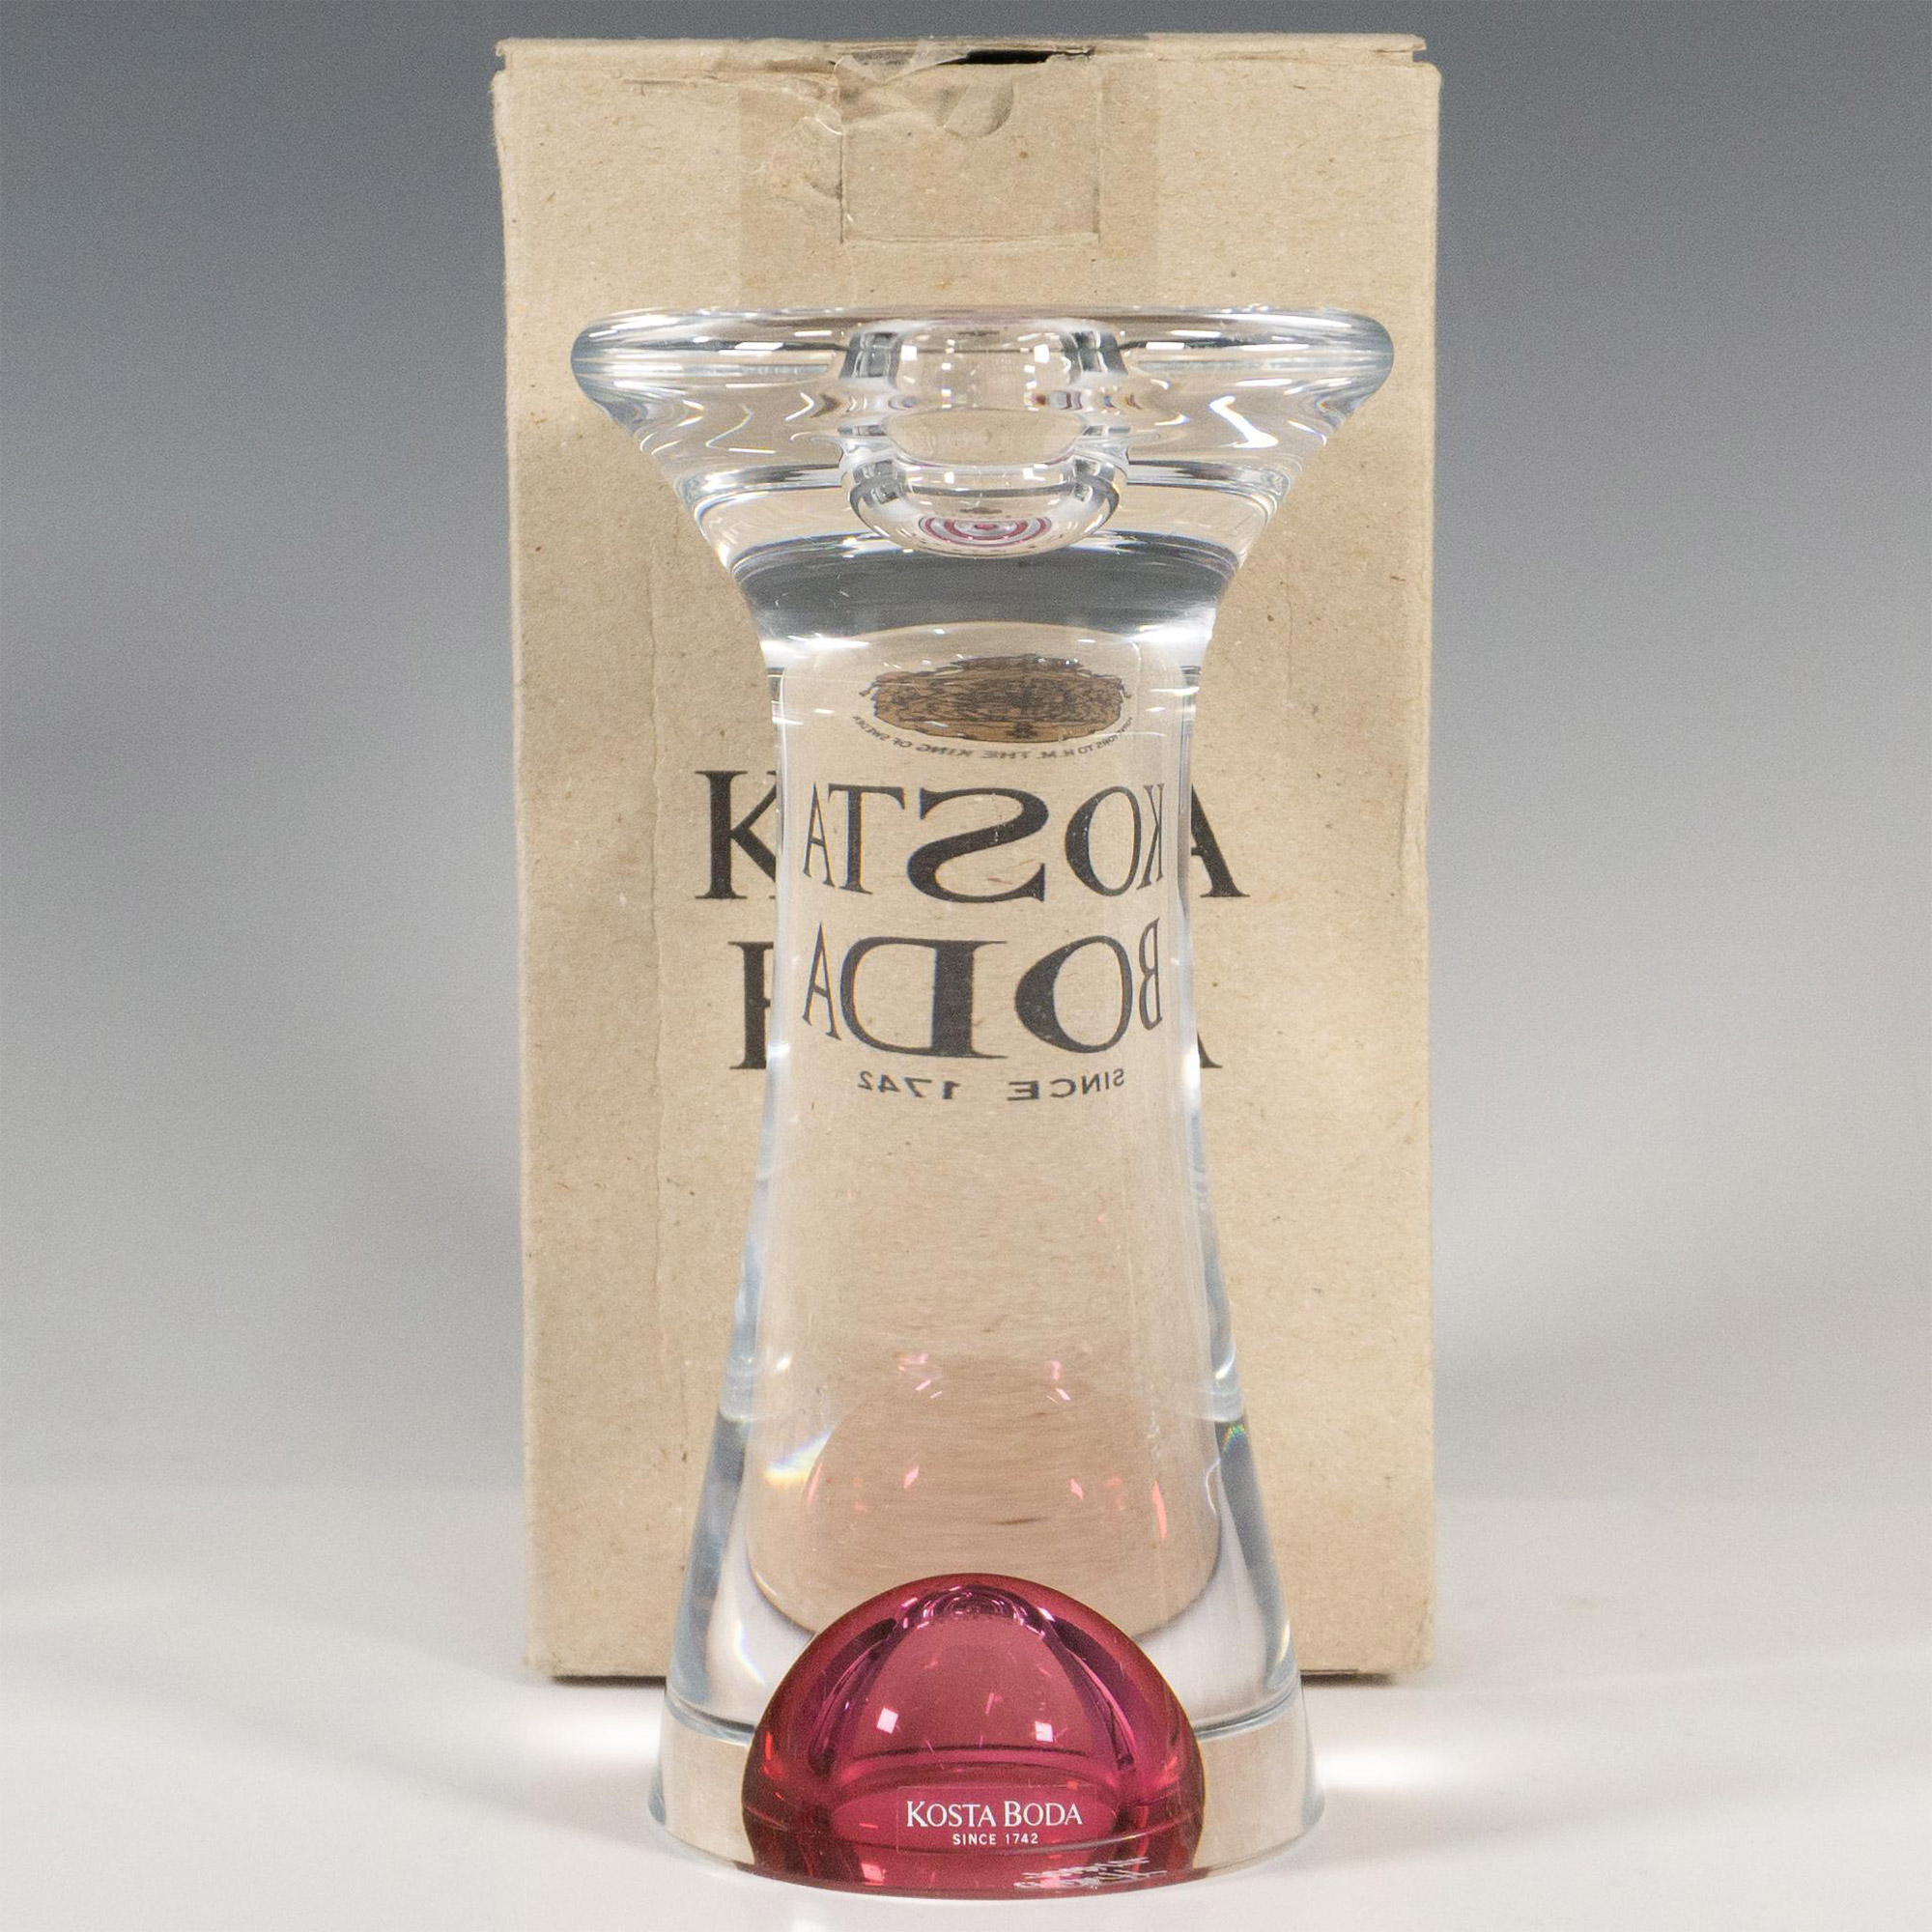 Kosta Boda by Goran Warff Glass Candlestick Holder, Zoom - Image 2 of 5